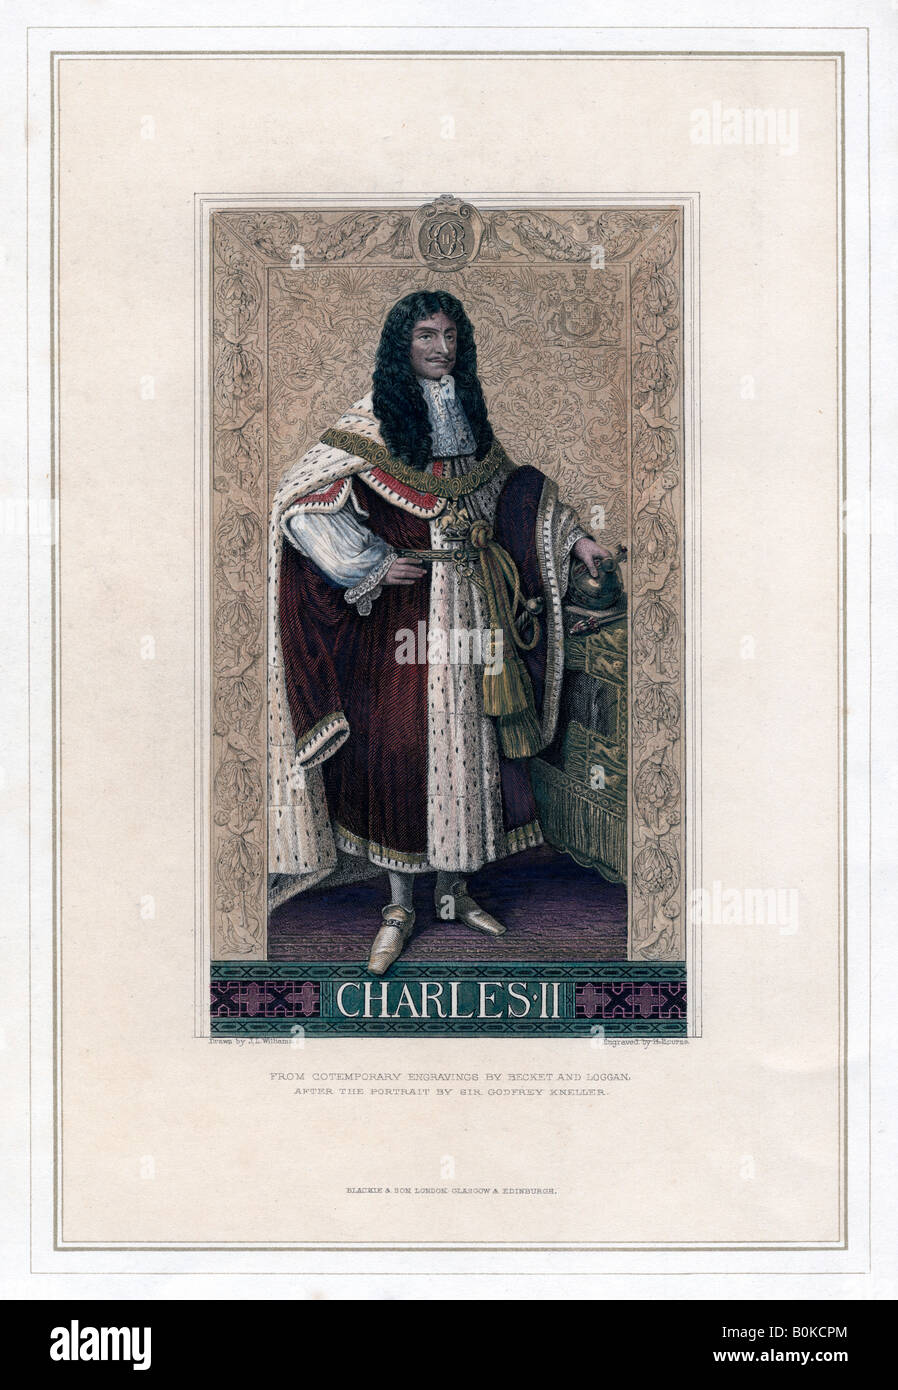 Carlo II, re d'Inghilterra e Scozia. Artista: H Bourne Foto Stock